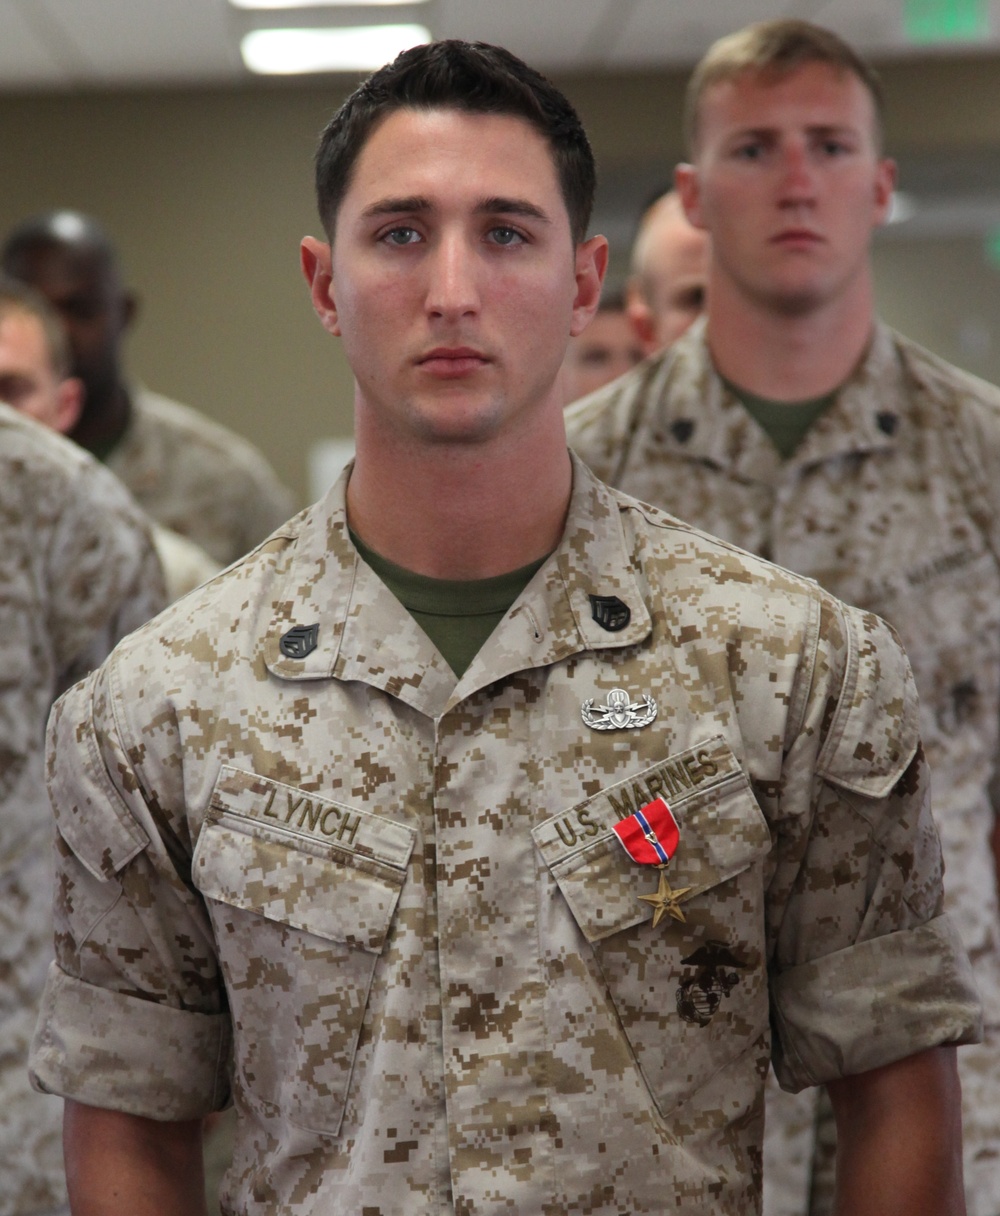 EOD Marine awarded for bravery, sacrifice